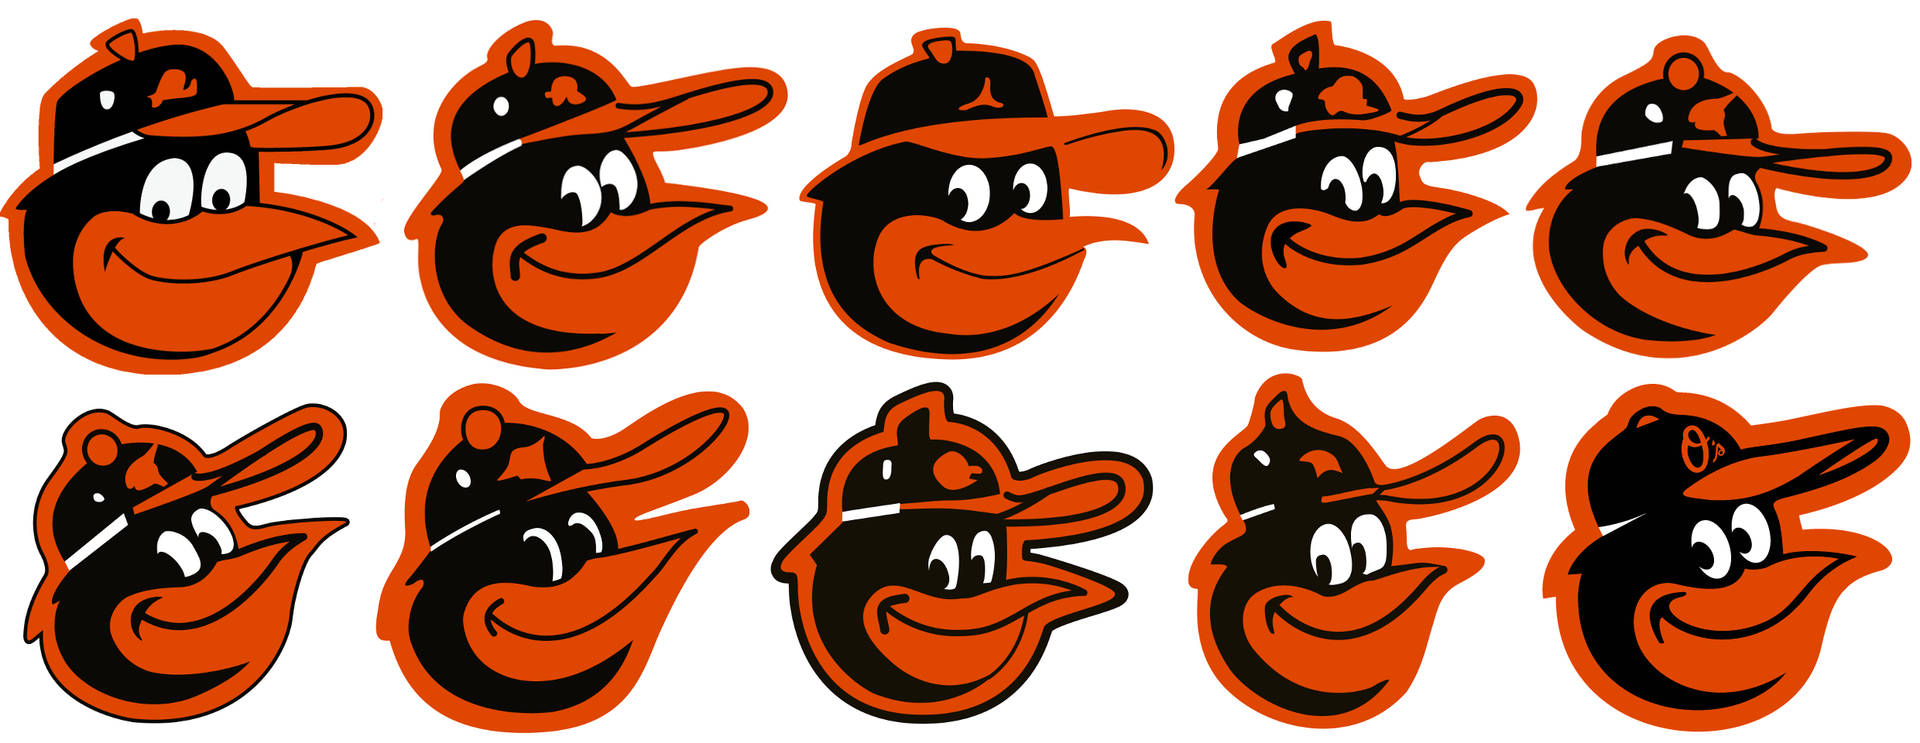 Baltimore Orioles Bird Mascot Logo In Vibrant Colors